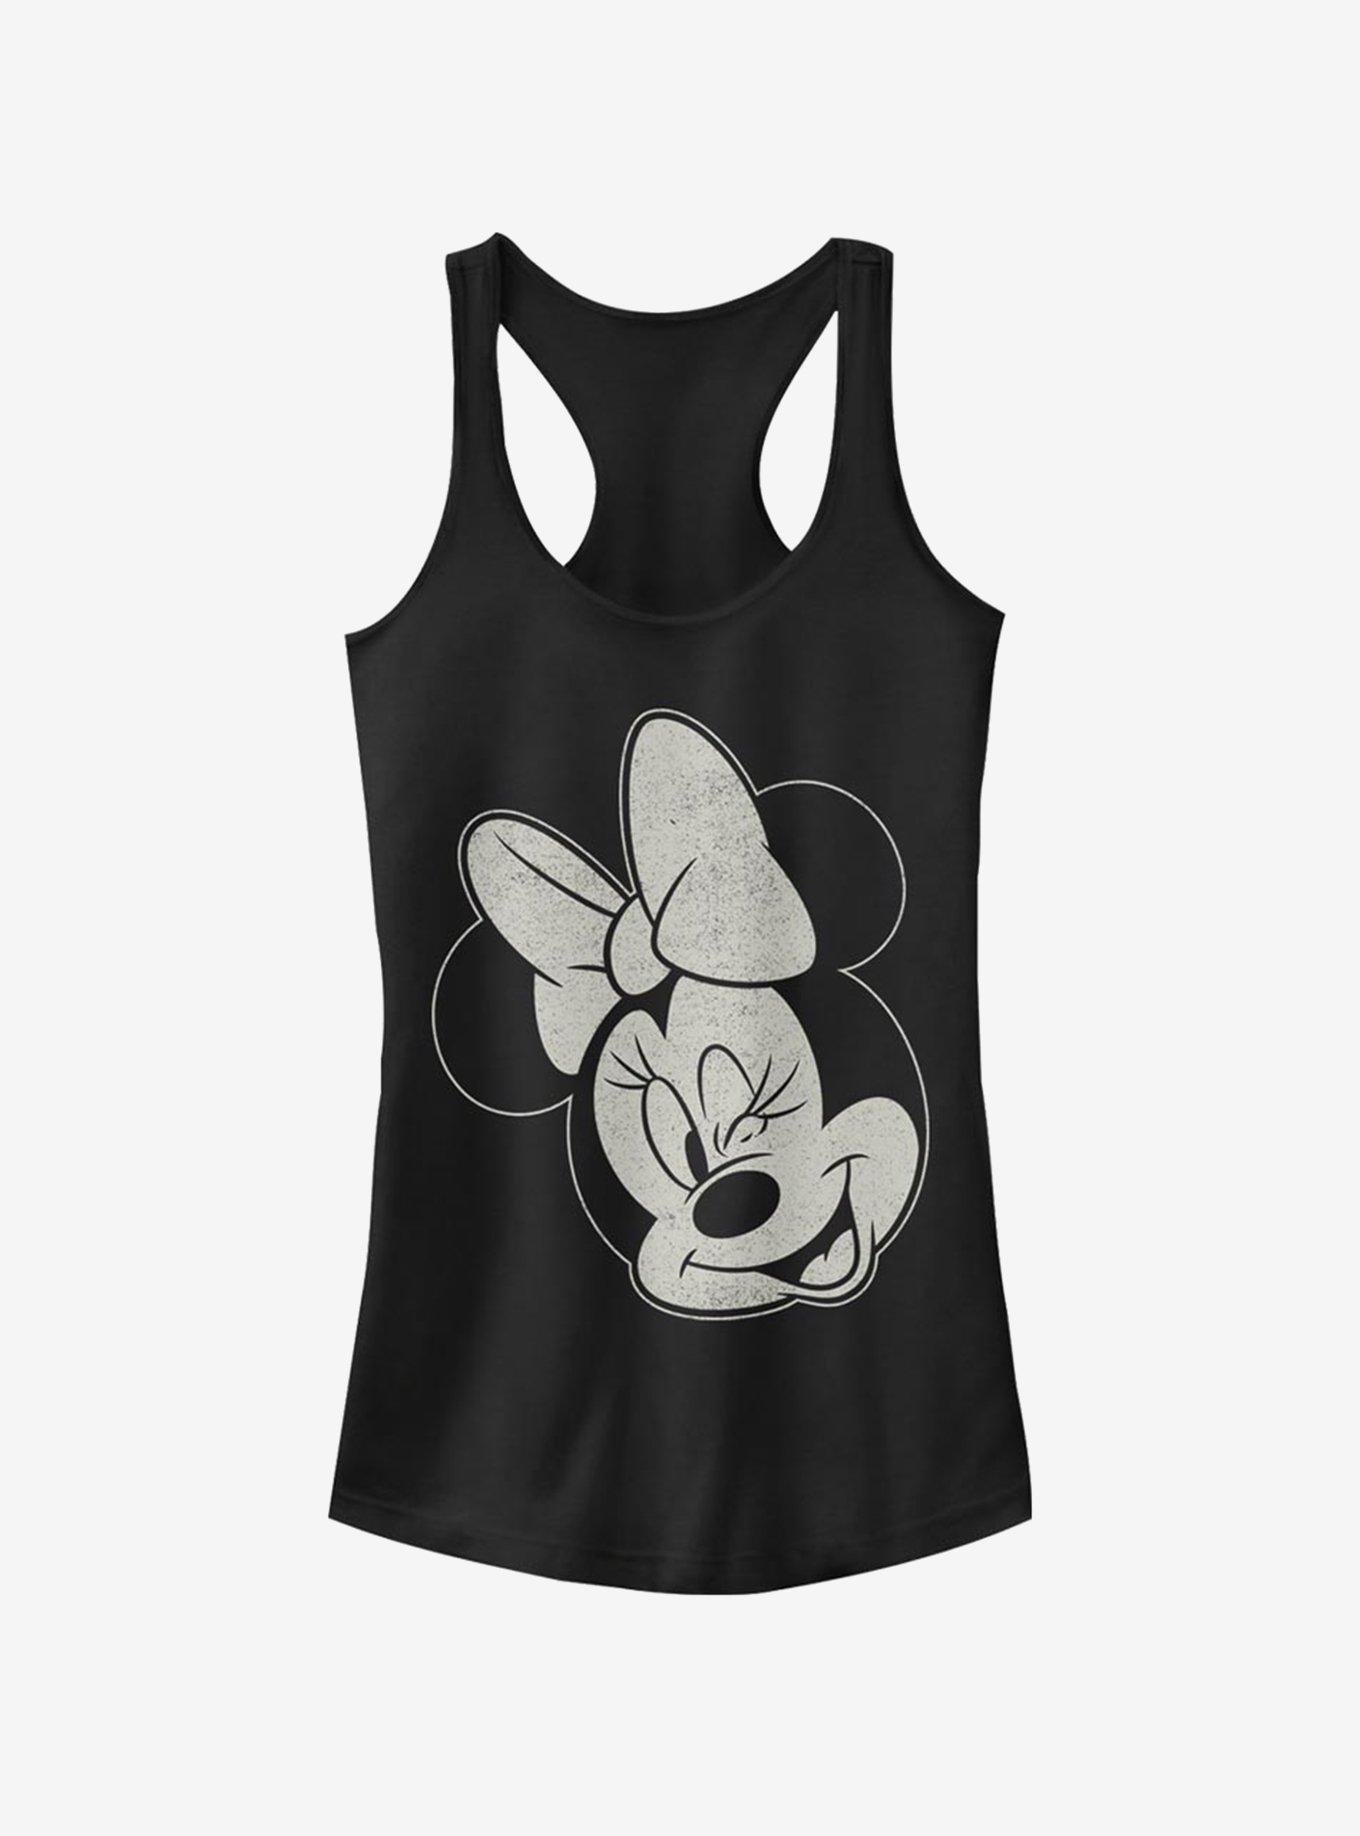 Disney Mickey Mouse Minnie Wink Girls Tank